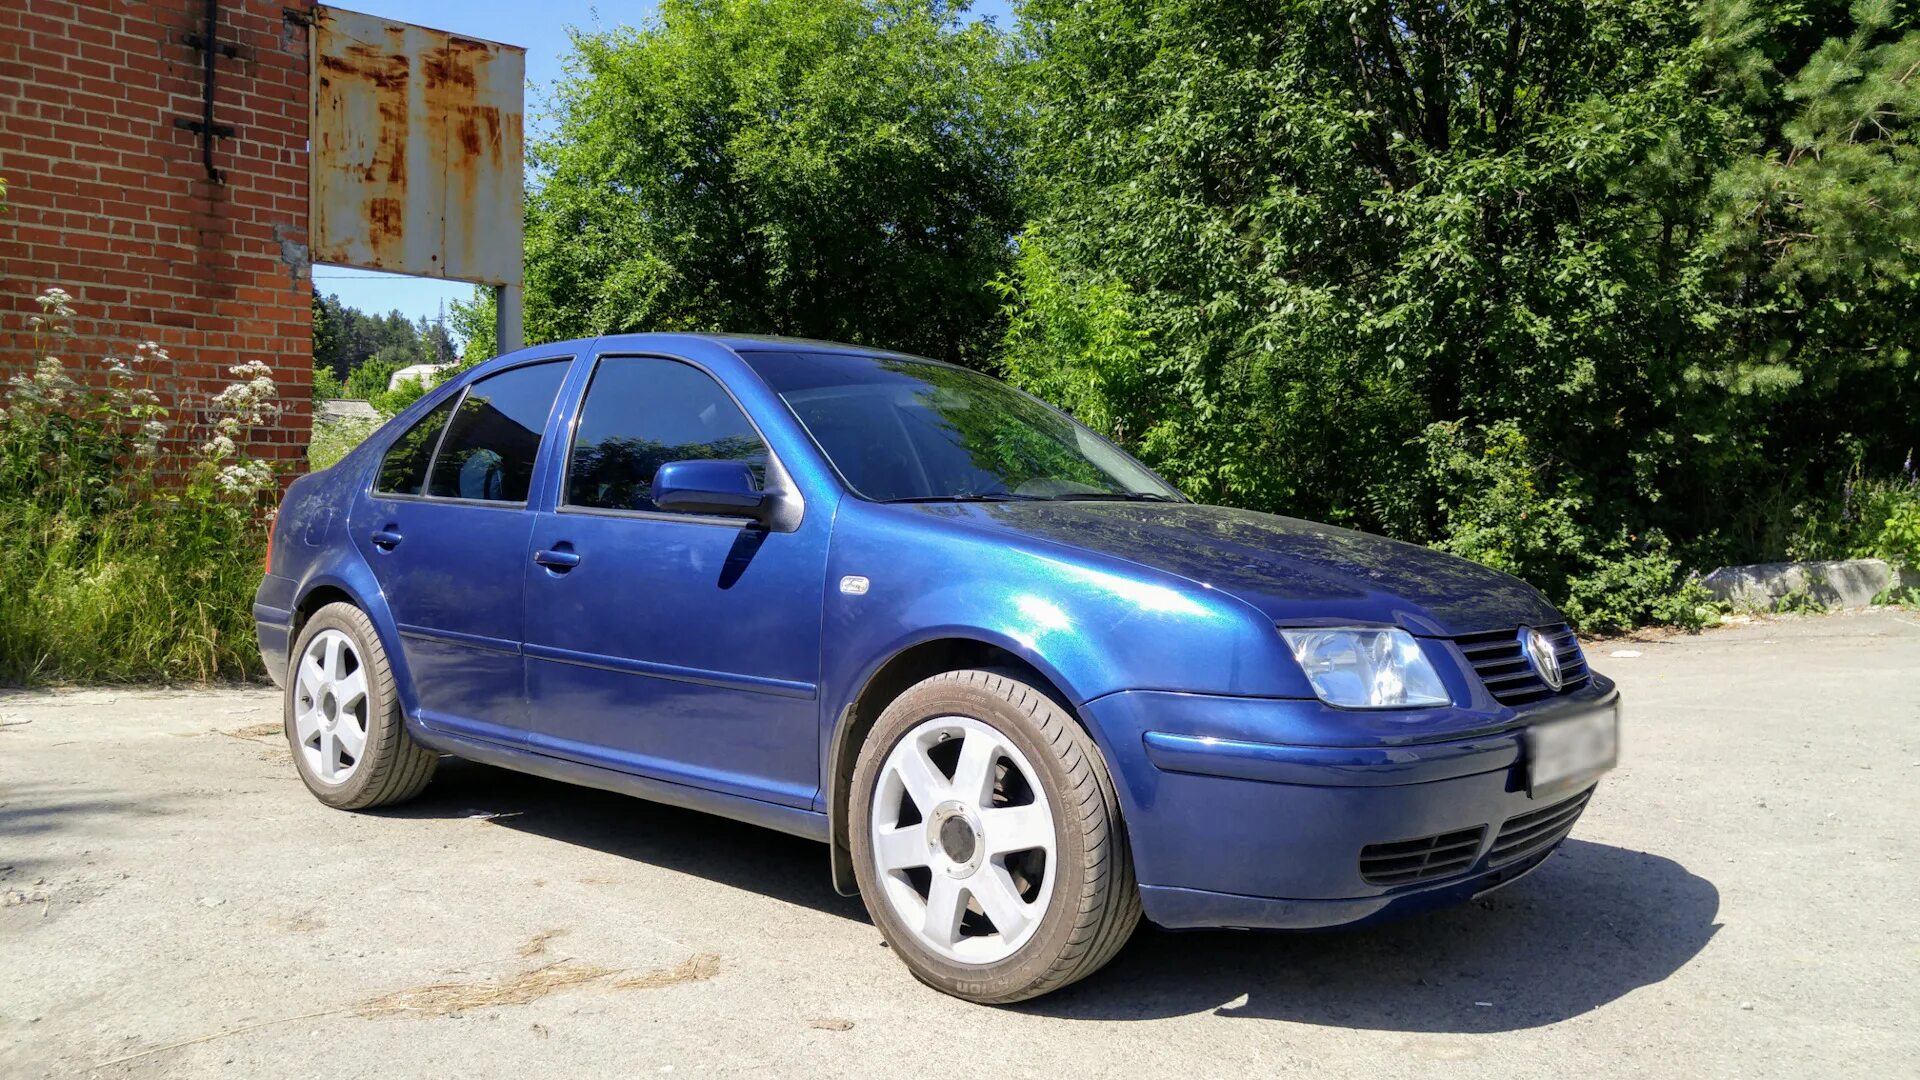 Бора 2001 года. VW Bora 2.3. Фольксваген Бора 1999 года синий цвет. Ly5z. Краска ly5z.